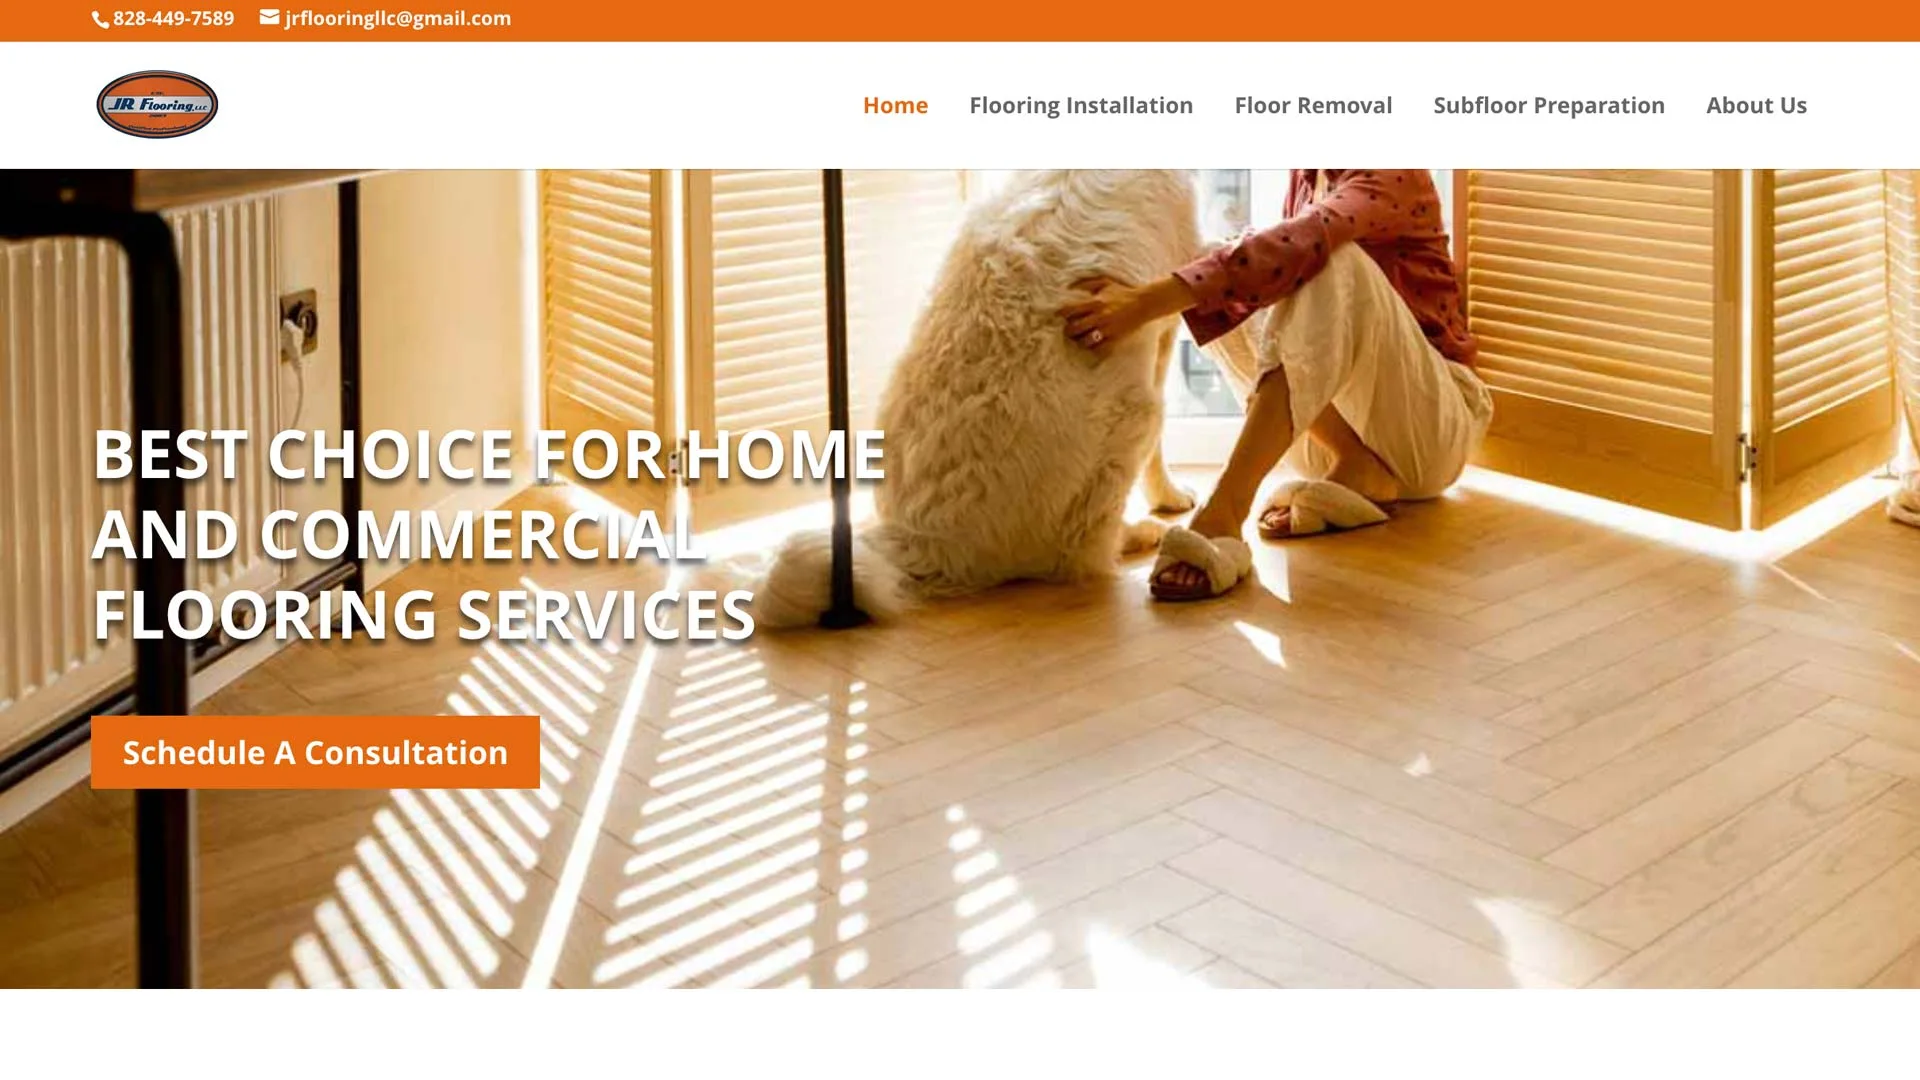 Jr Flooring LLC small business website designed by Hickory NC web design service.